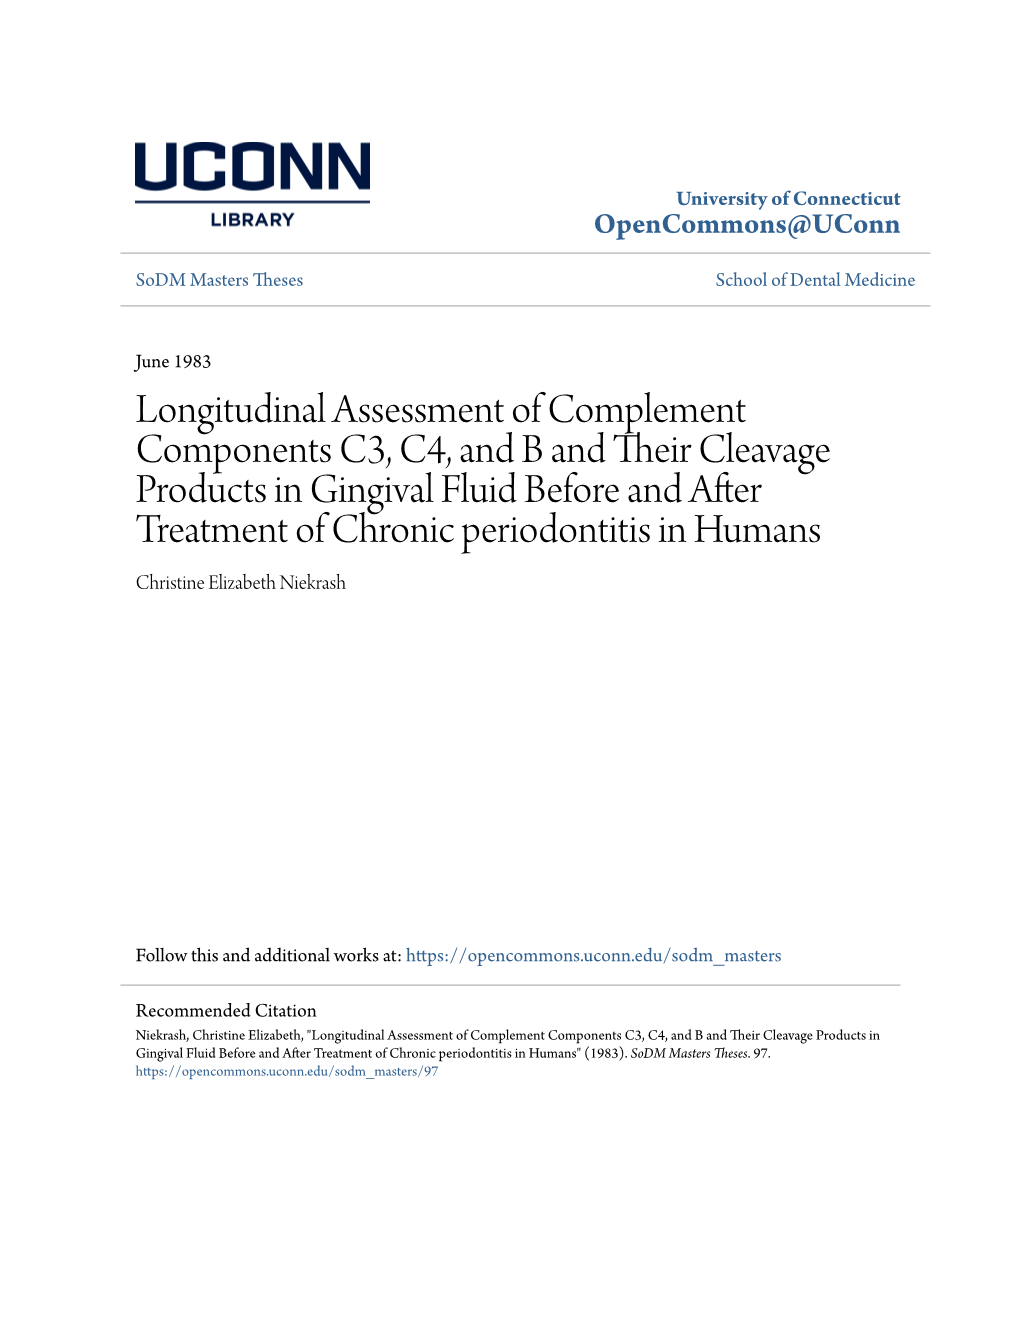 Longitudinal Assessment of Complement Components C3, C4